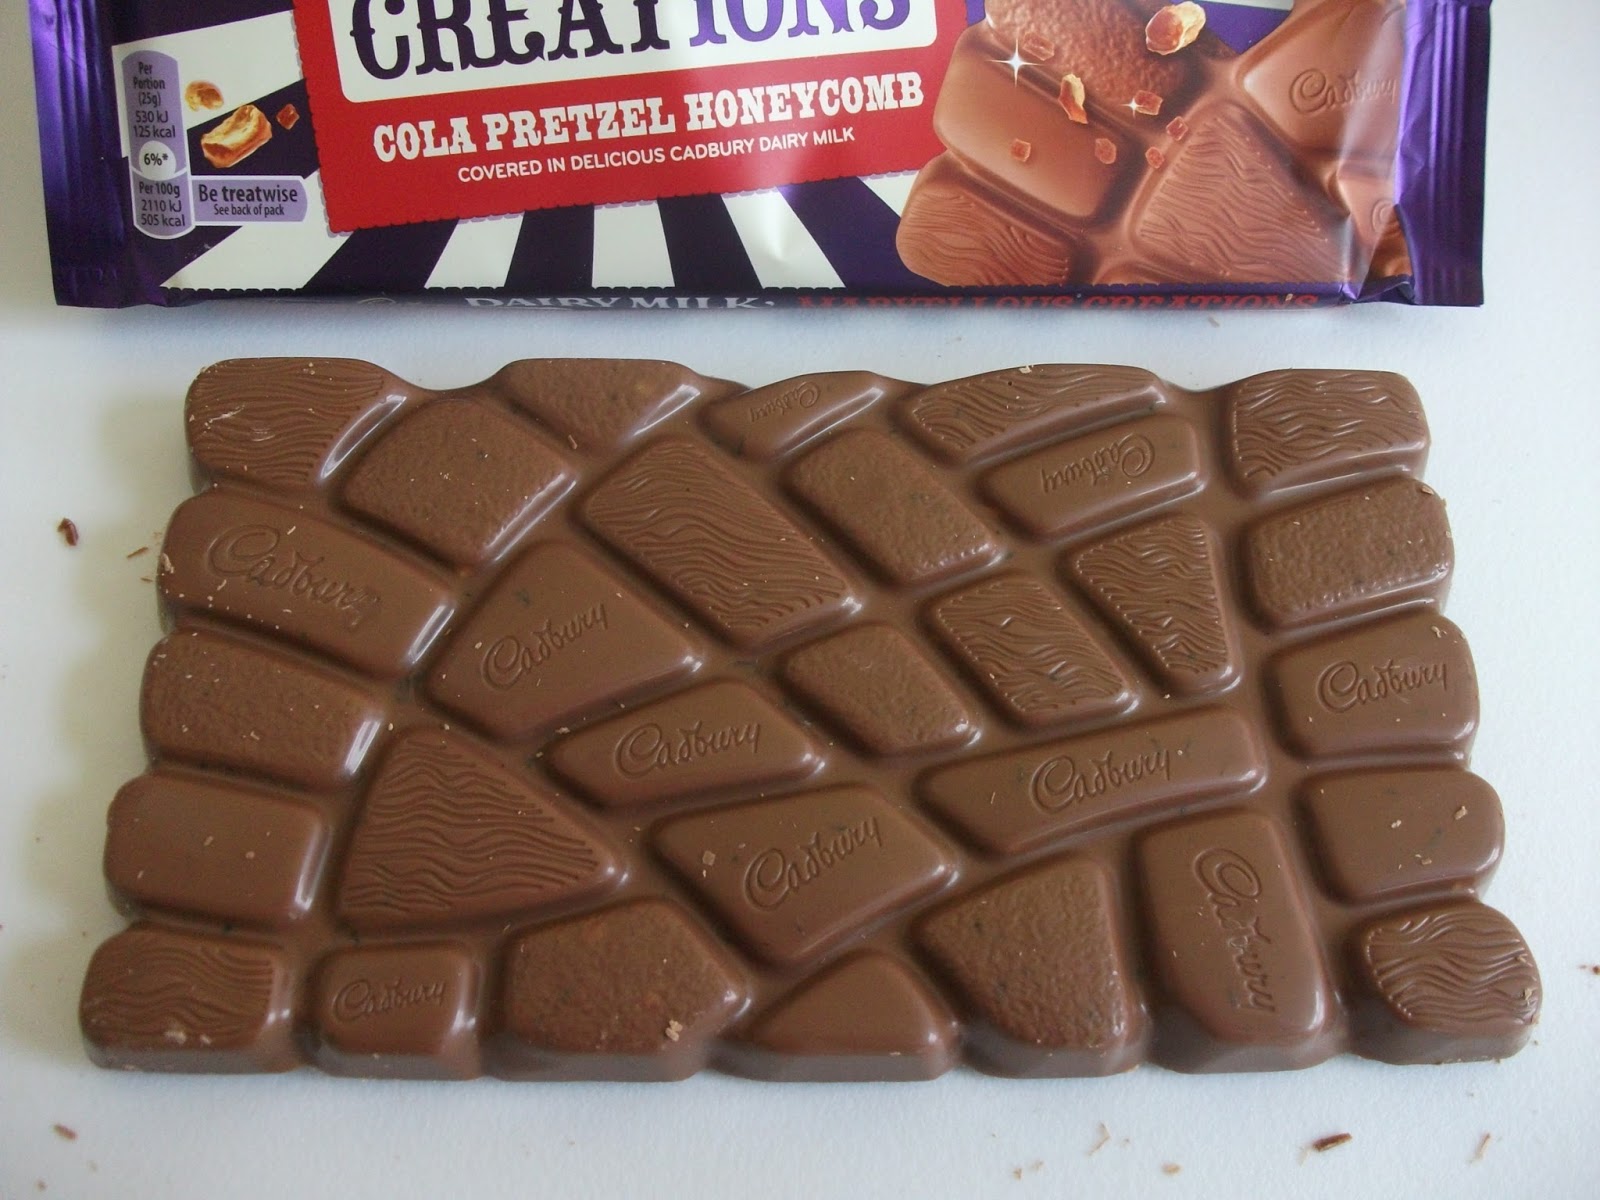 Candy dreams do come true: New Cadbury chocolate doesn't melt